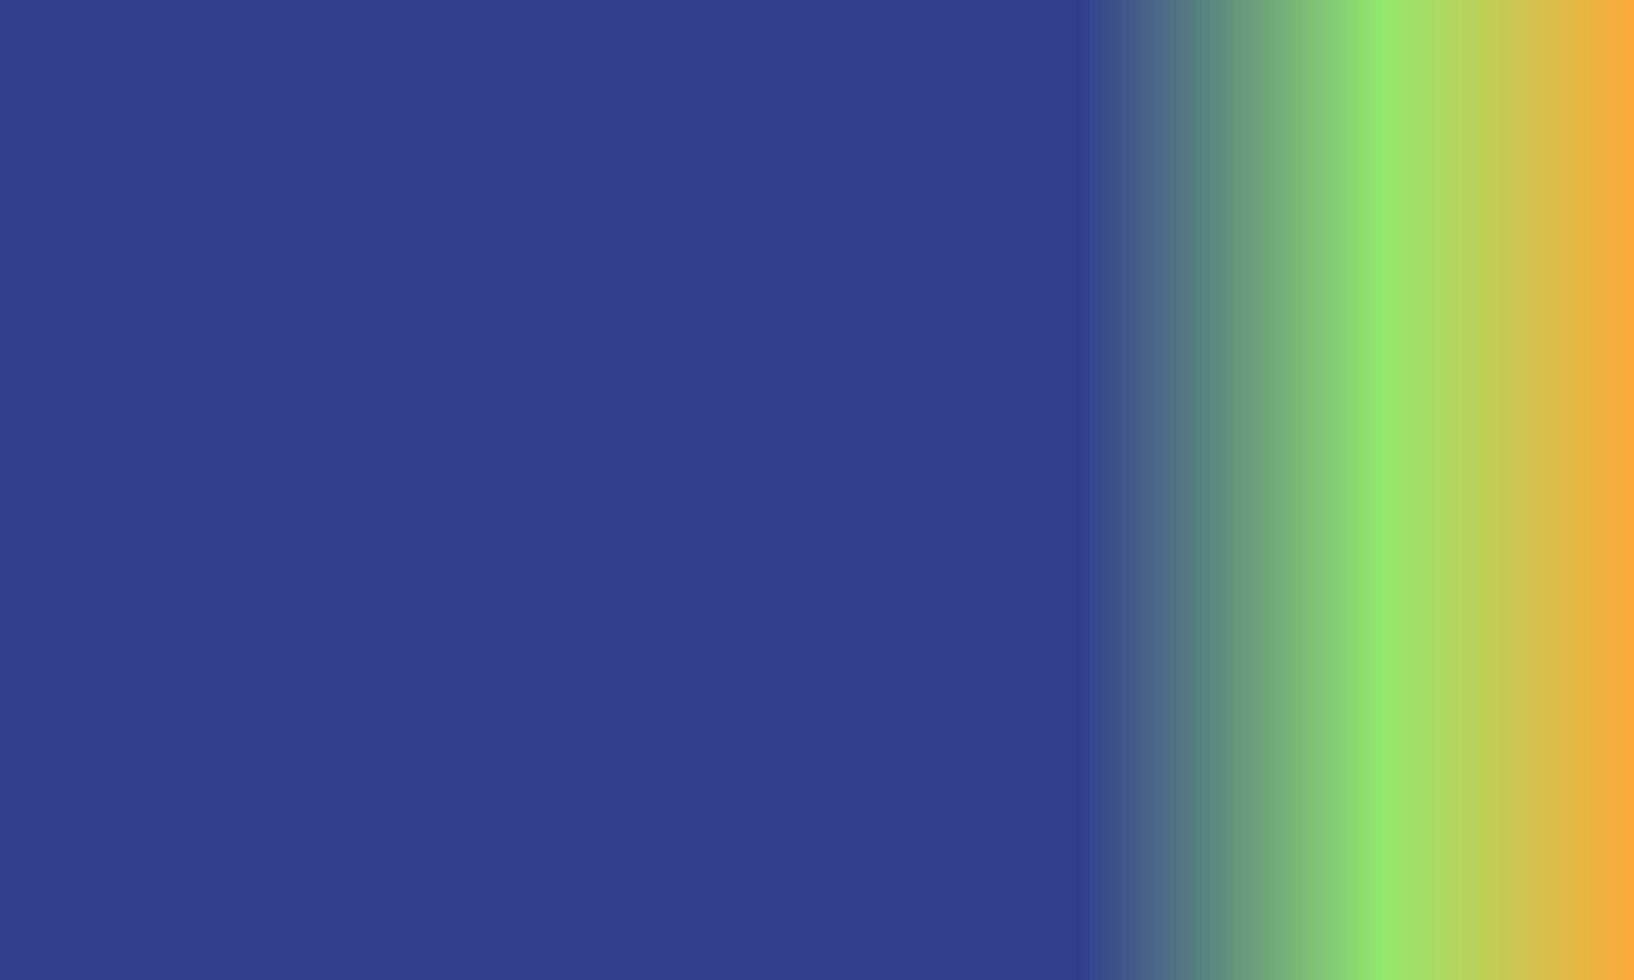 Design simple NAVY BLUE,GREEN and ORANGE gradient color illustration background photo